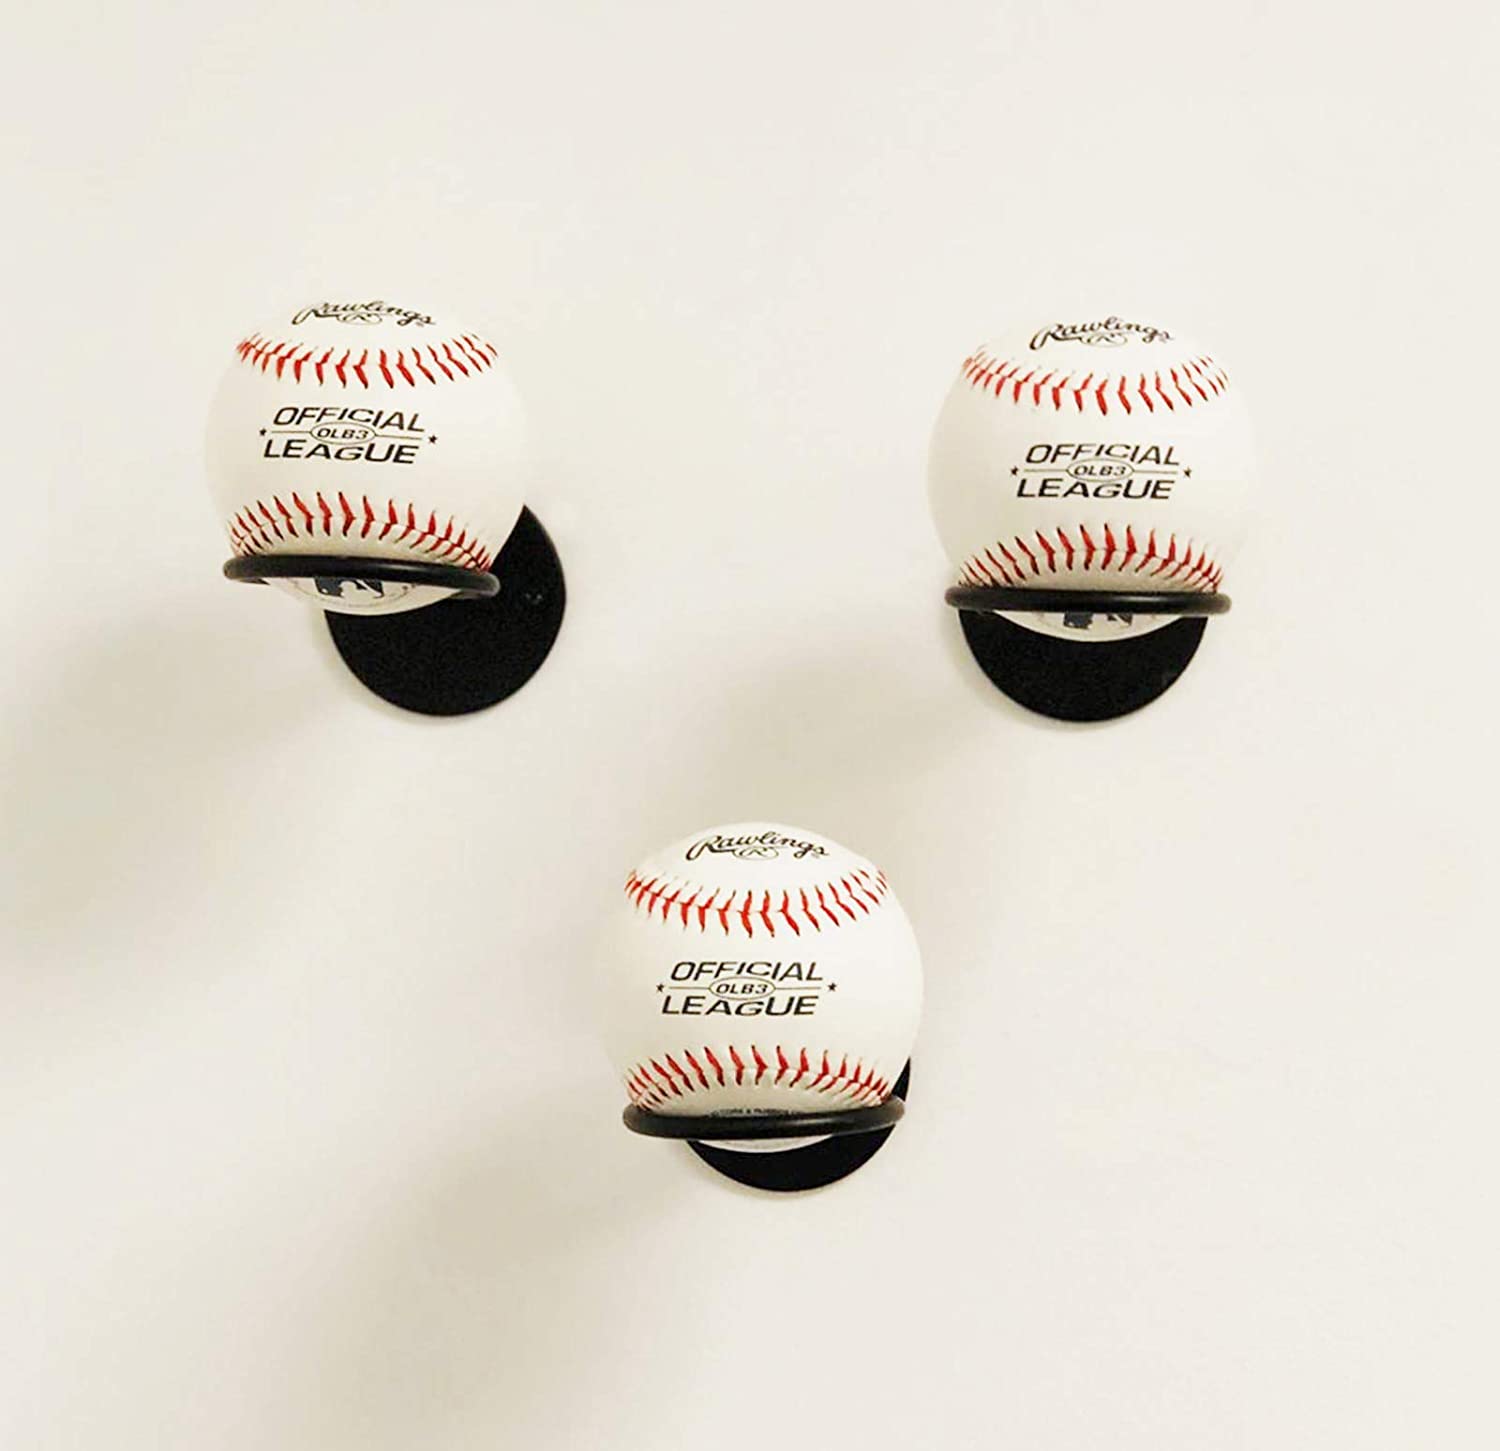 Wall Ball Storage (Baseball) - Wall Mounted Baseball Rack 3 Baseballs